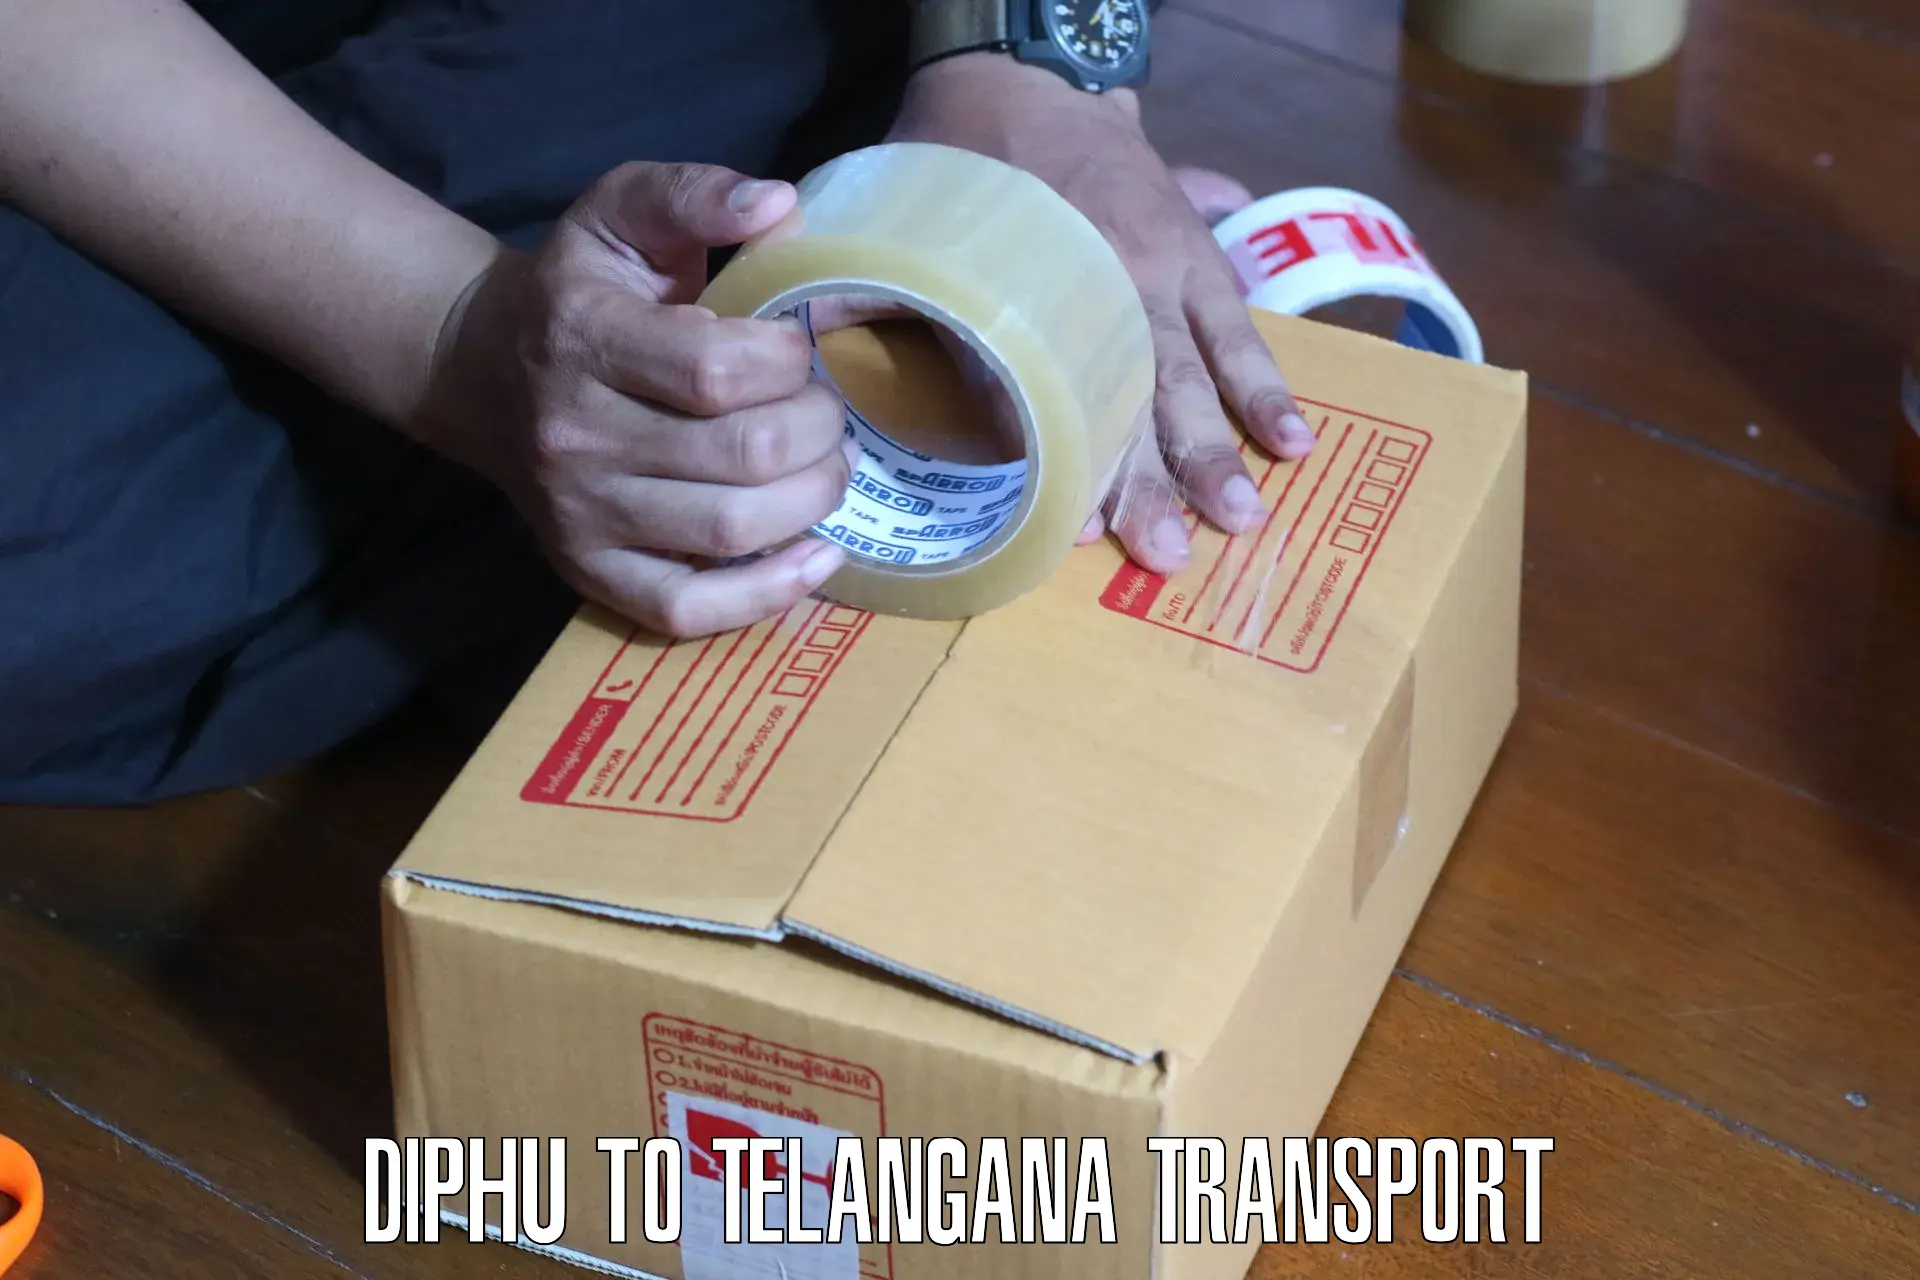 Shipping partner Diphu to Nalgonda